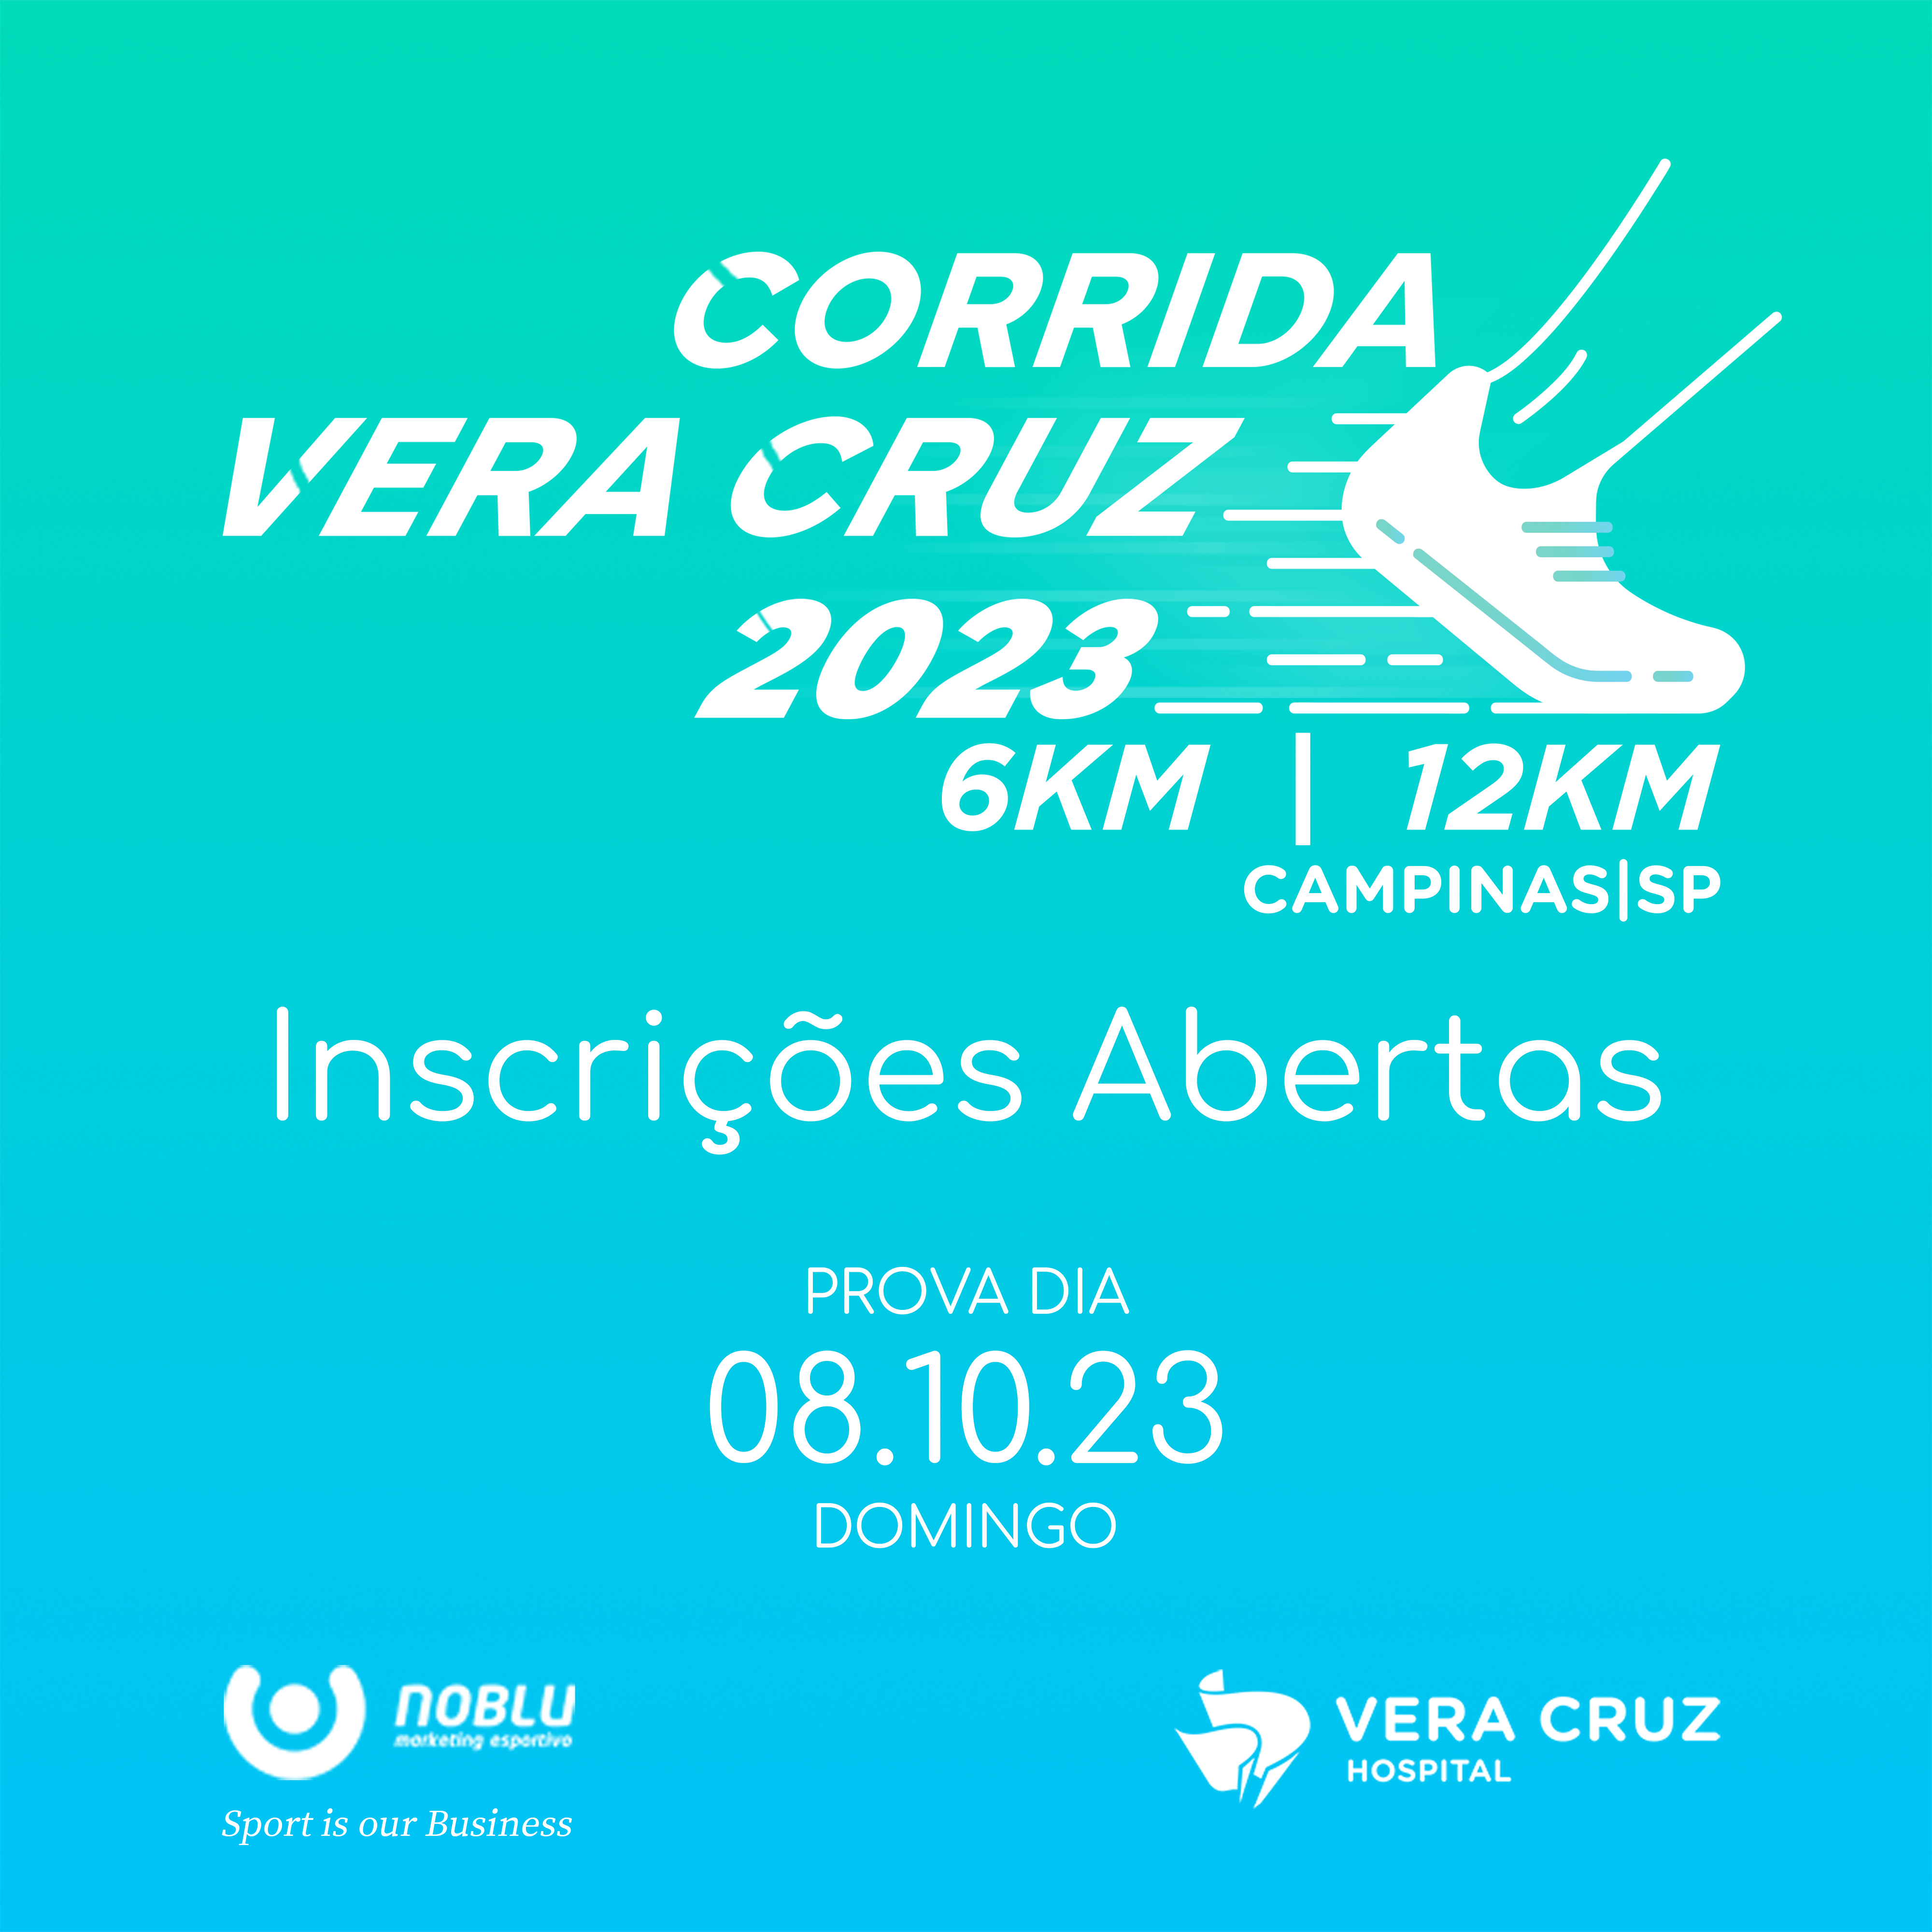 Corrida Vera Cruz 2023